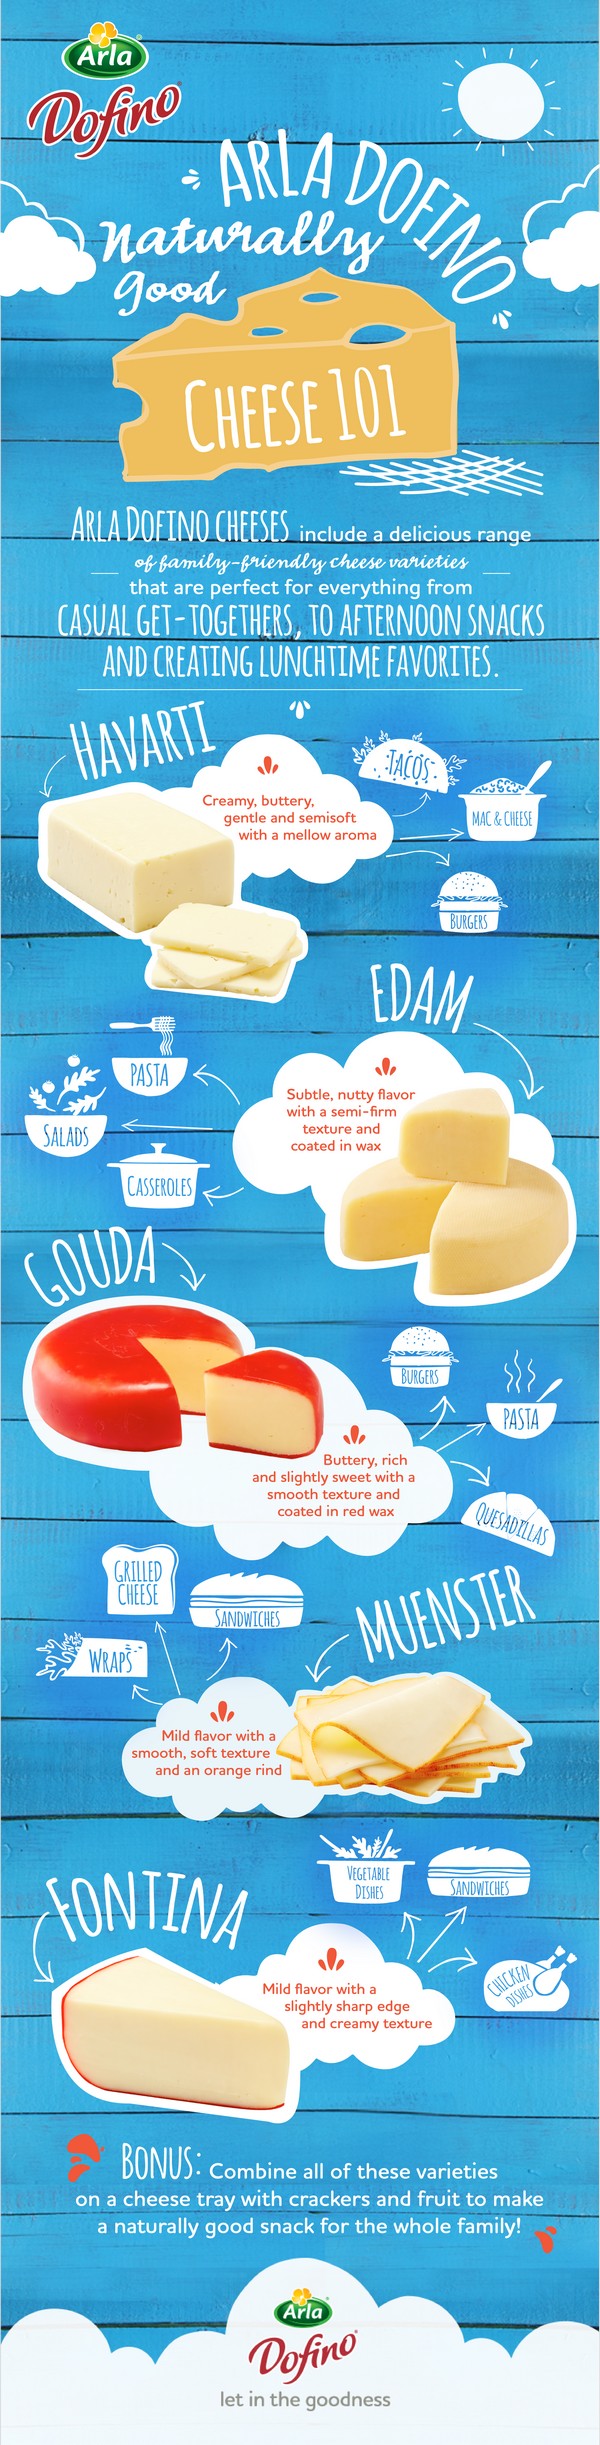 Arla Dofino Cheese 101 Infographic copy